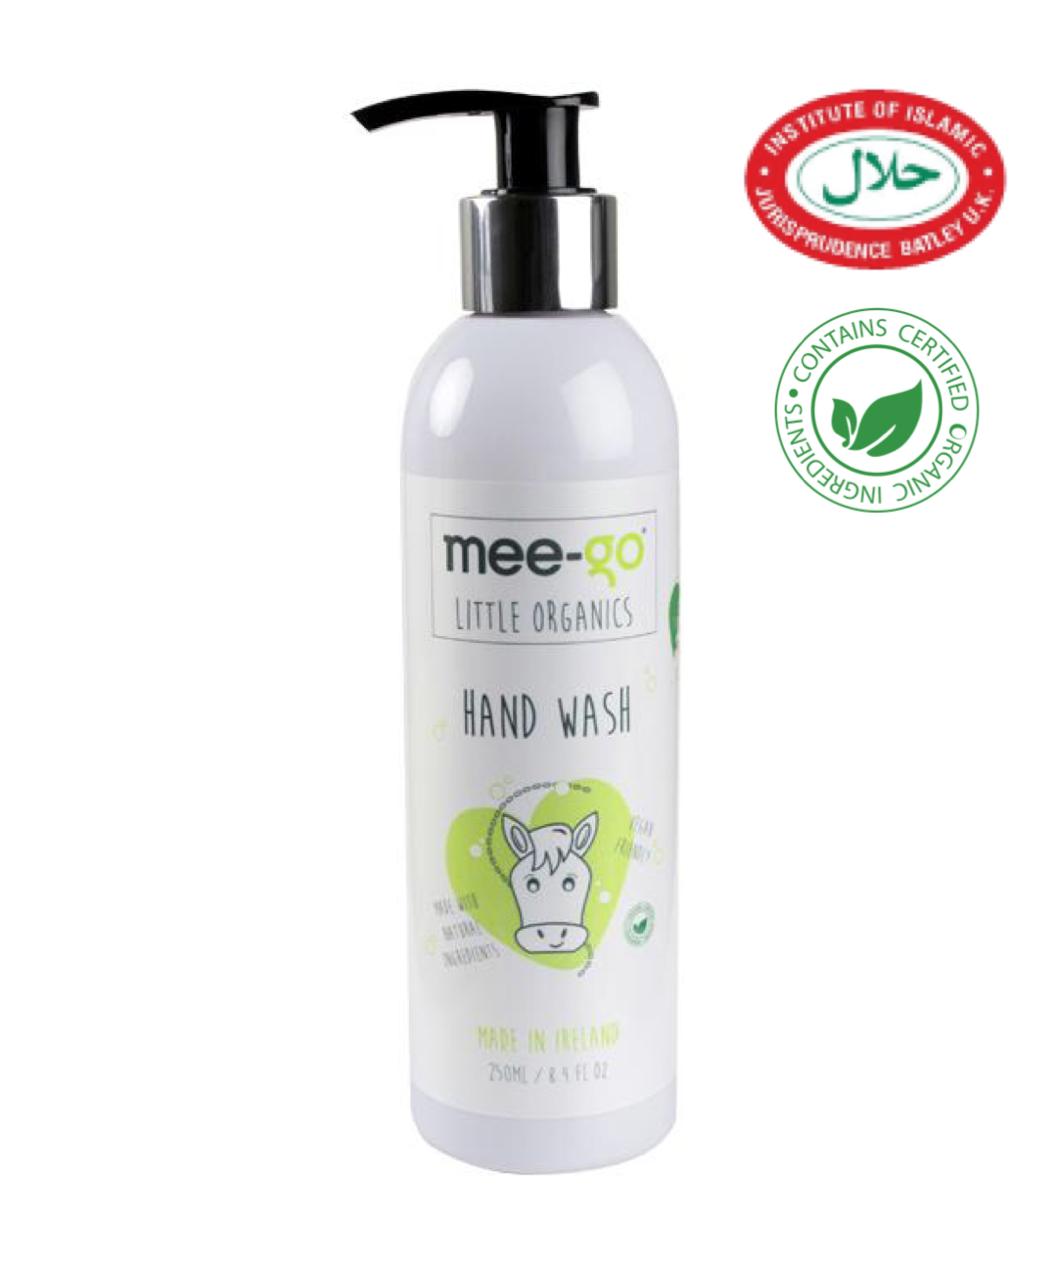 Mee-go Little Organics Halal Hand Wash Sanitizer